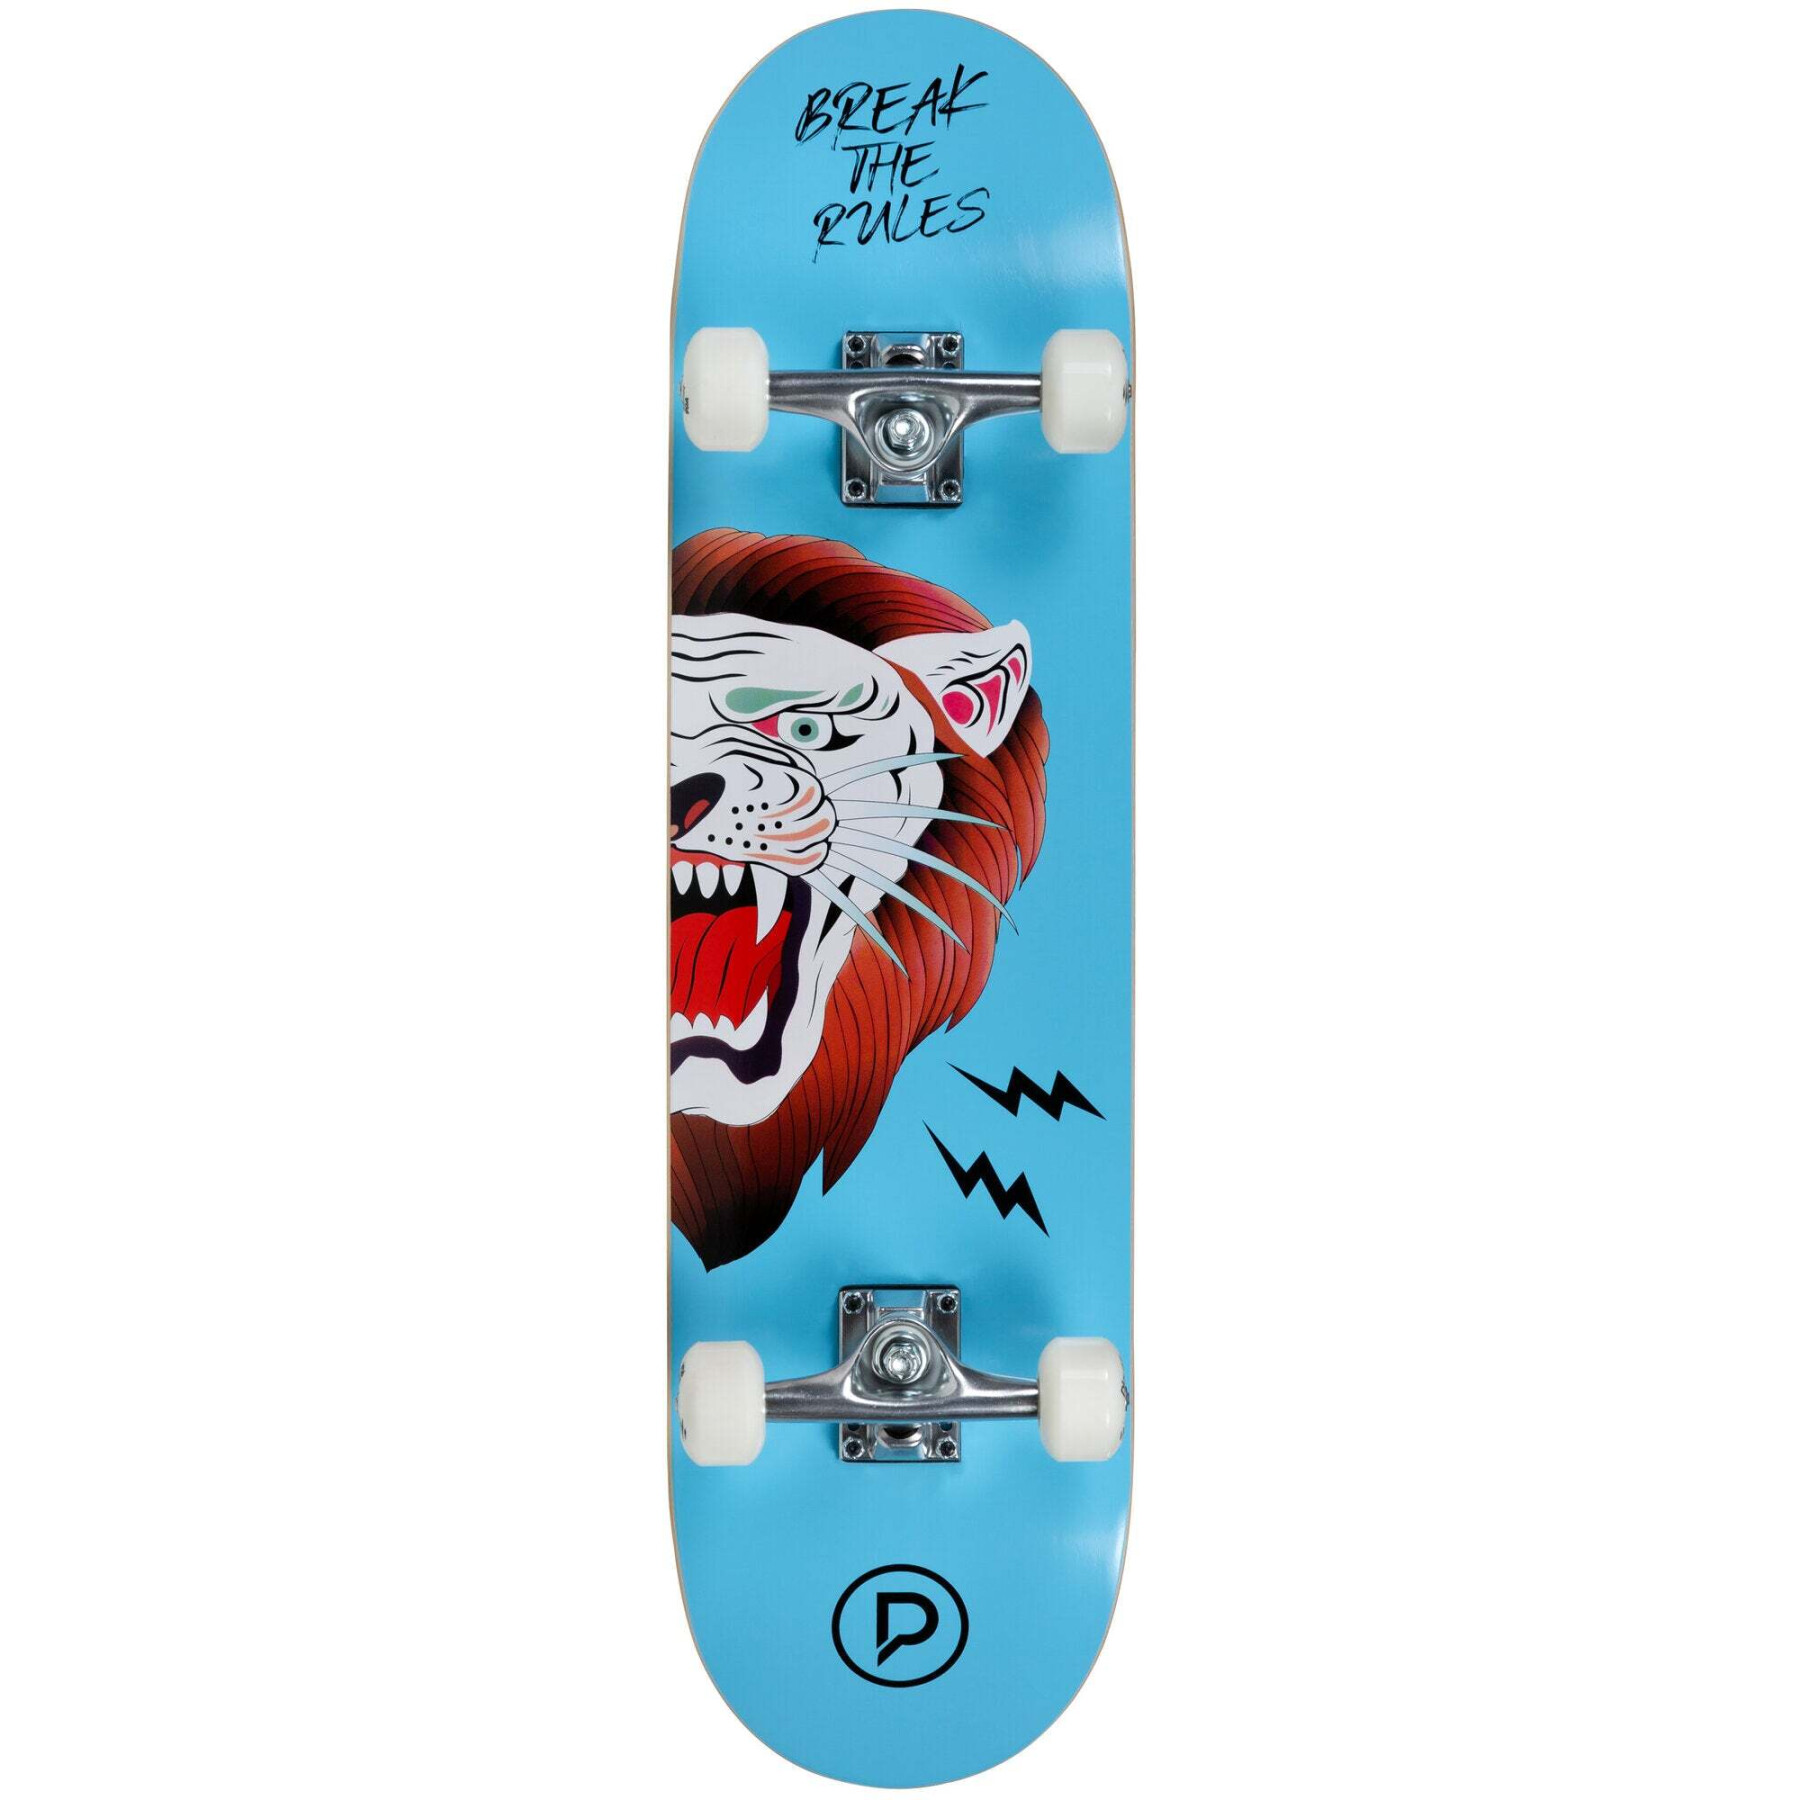 Skateboard Playlife Lion